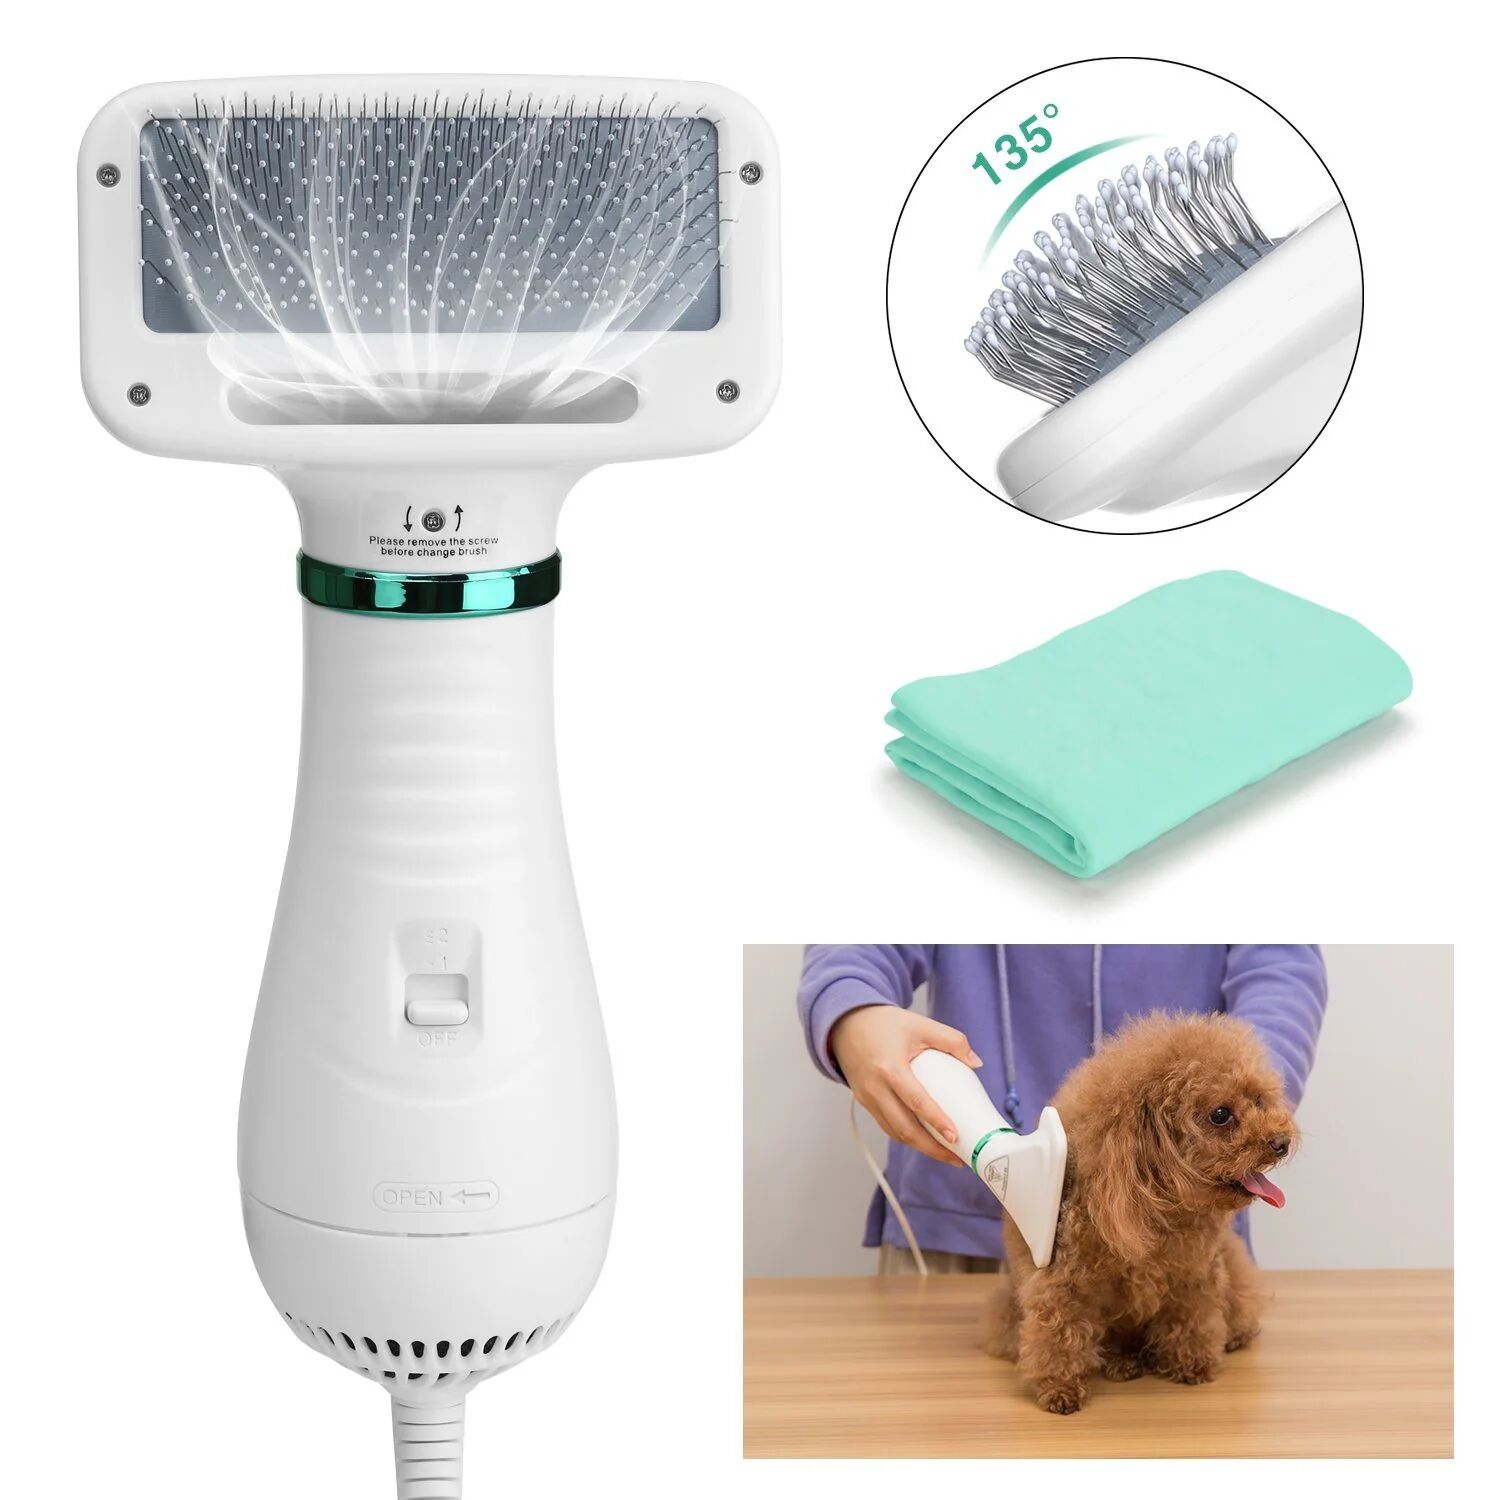 DailySale 2-in-1 Pet Hair Dryer Blower Slicker Brush Portable Dog Cat Grooming Low Noise